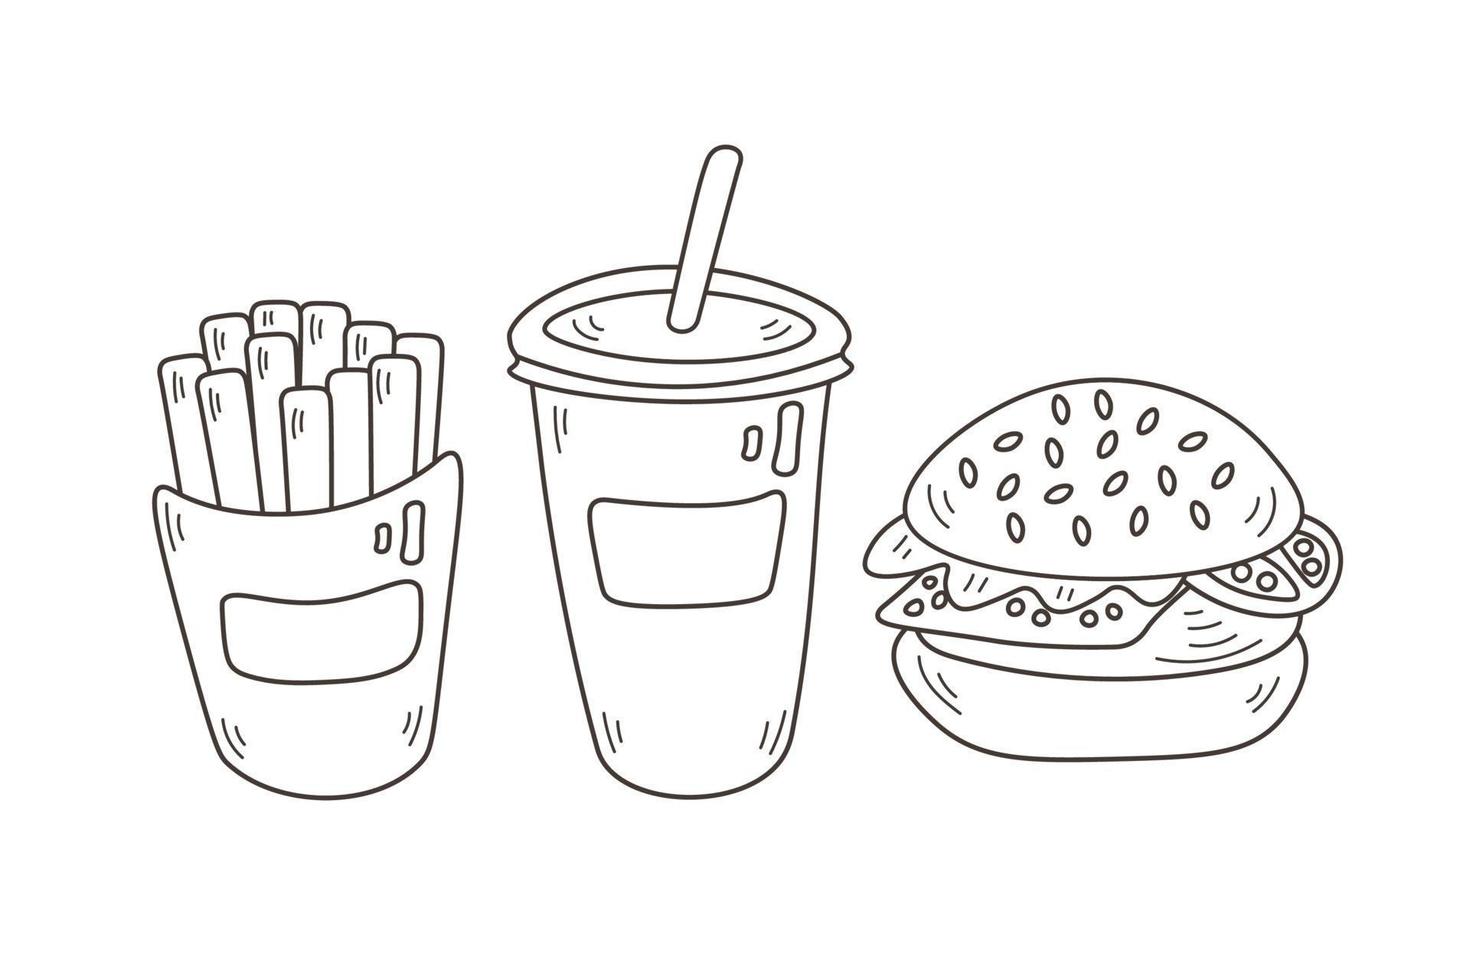 Doodle fast food elements set vector